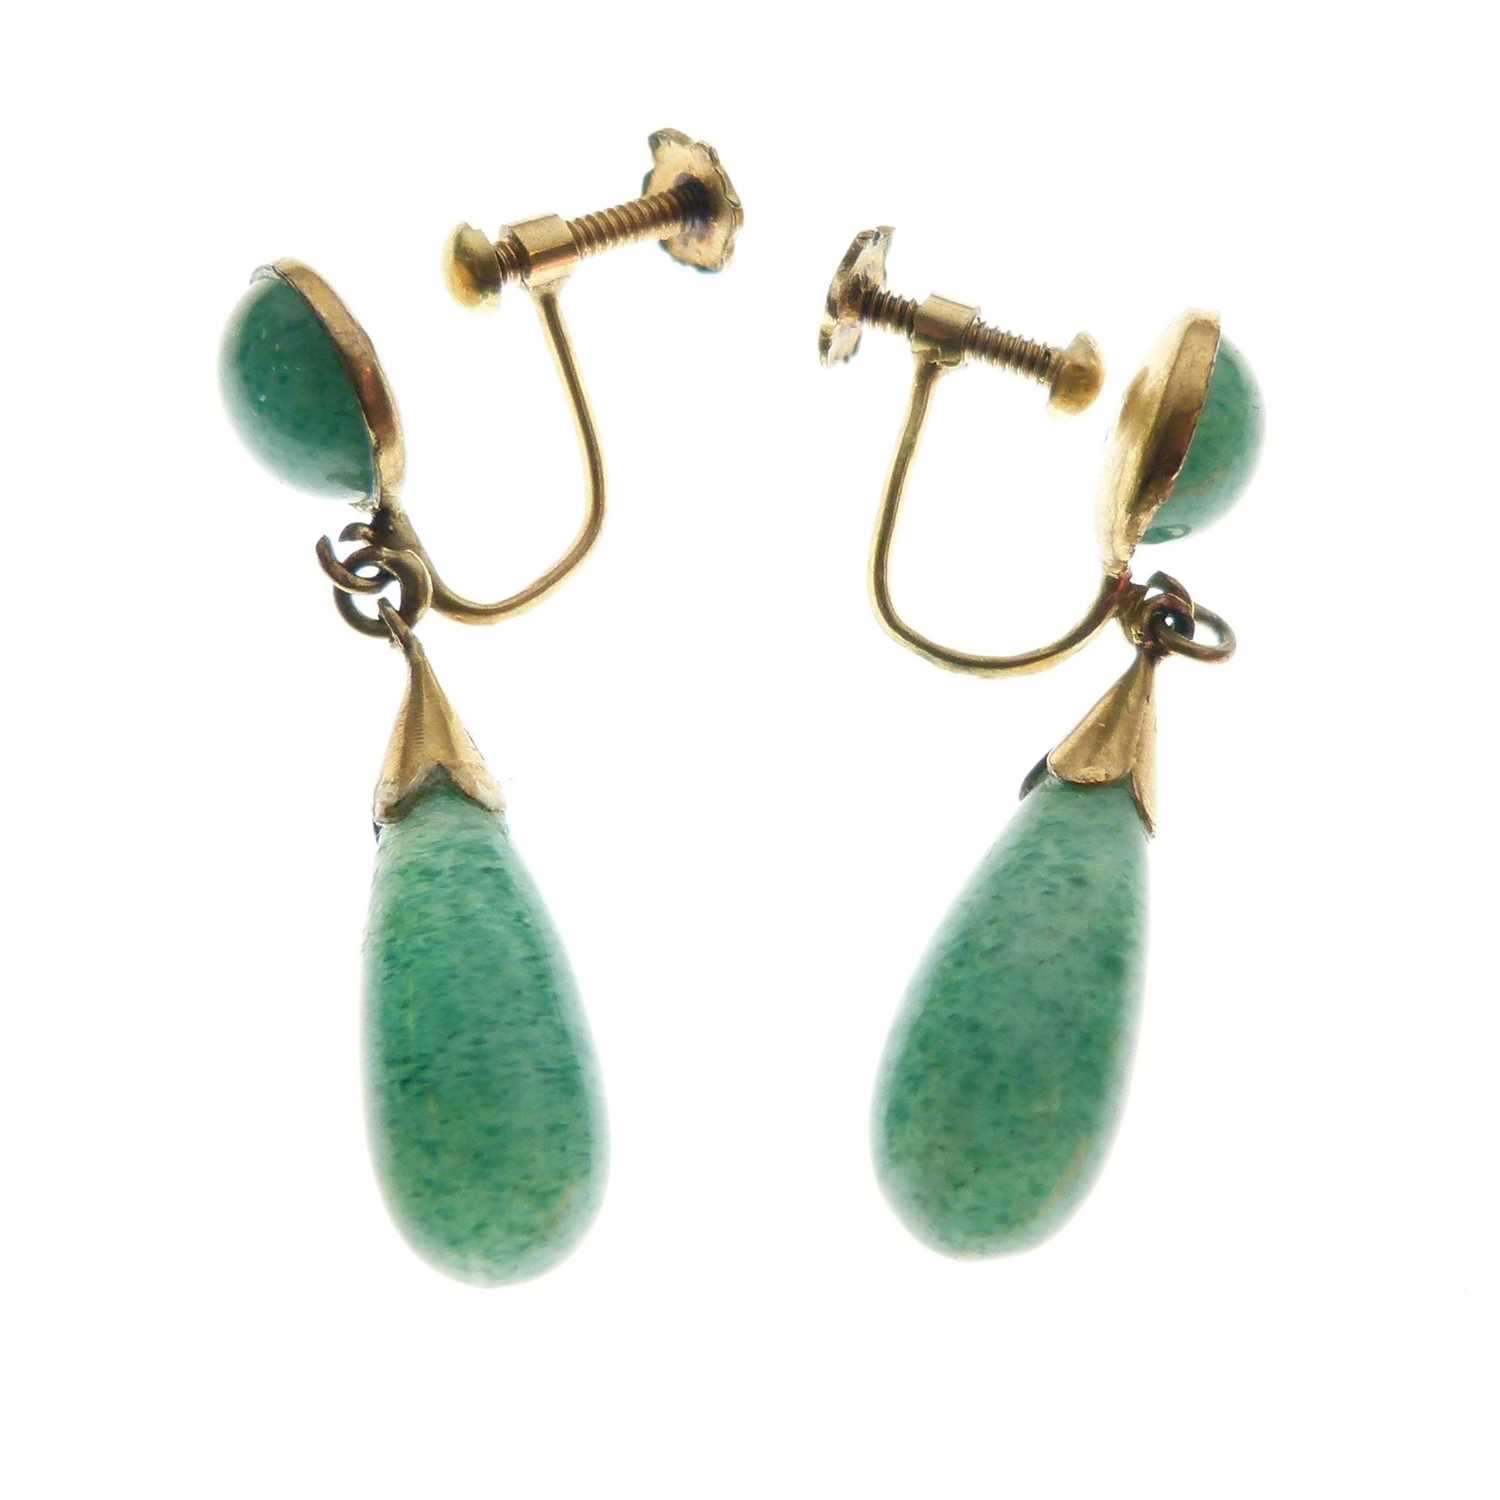 Pair of dyed jade screw-back ear studs